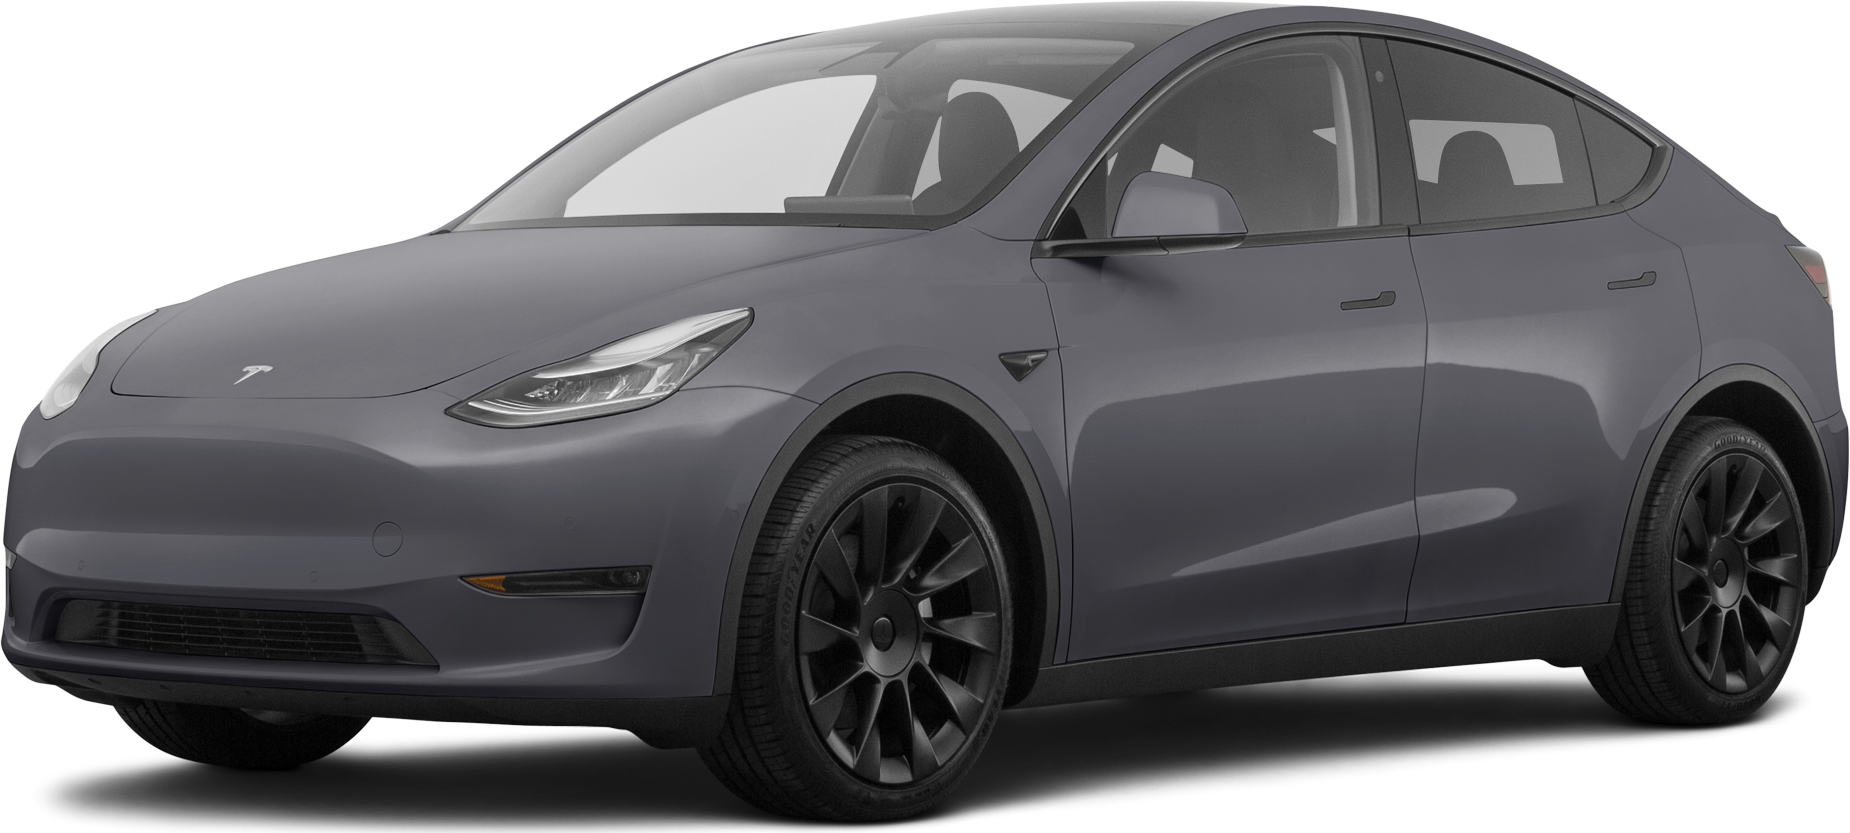 2021 Tesla Model Y: Choosing the Right Trim - Autotrader